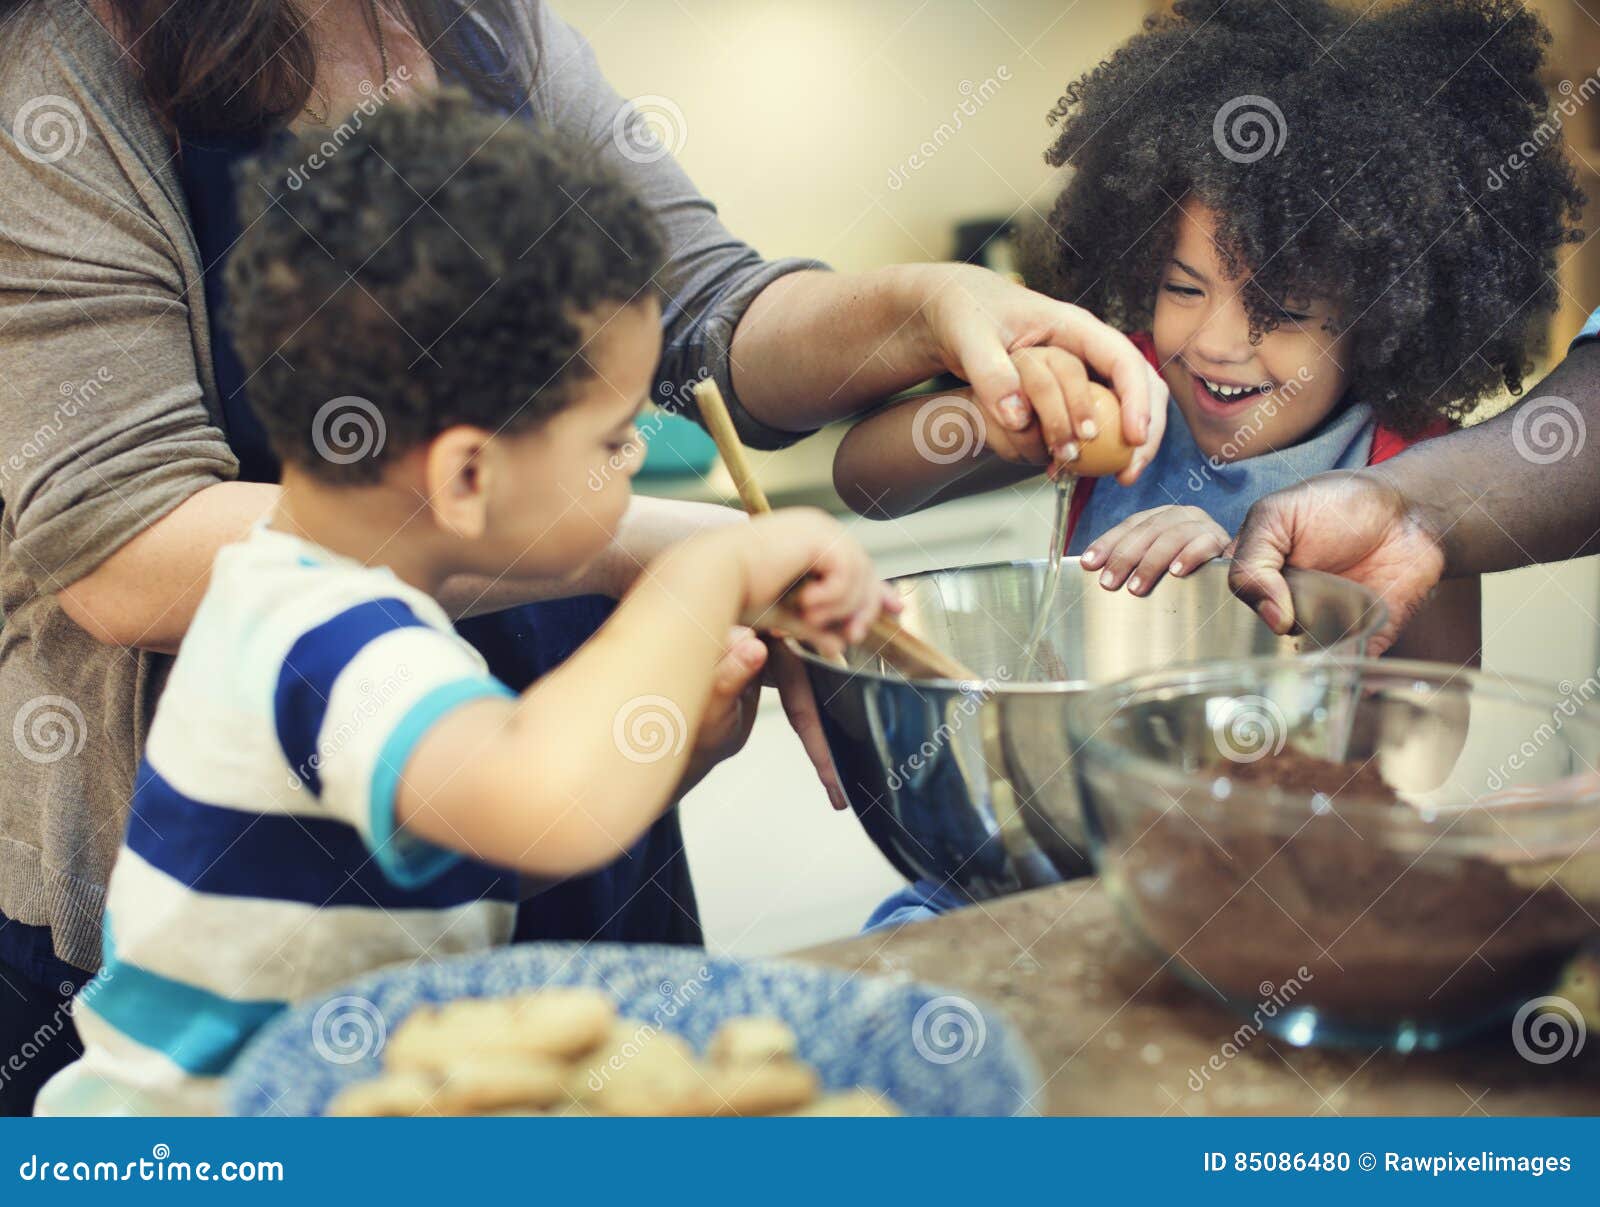 kids cooking baking cookies kitchen concept